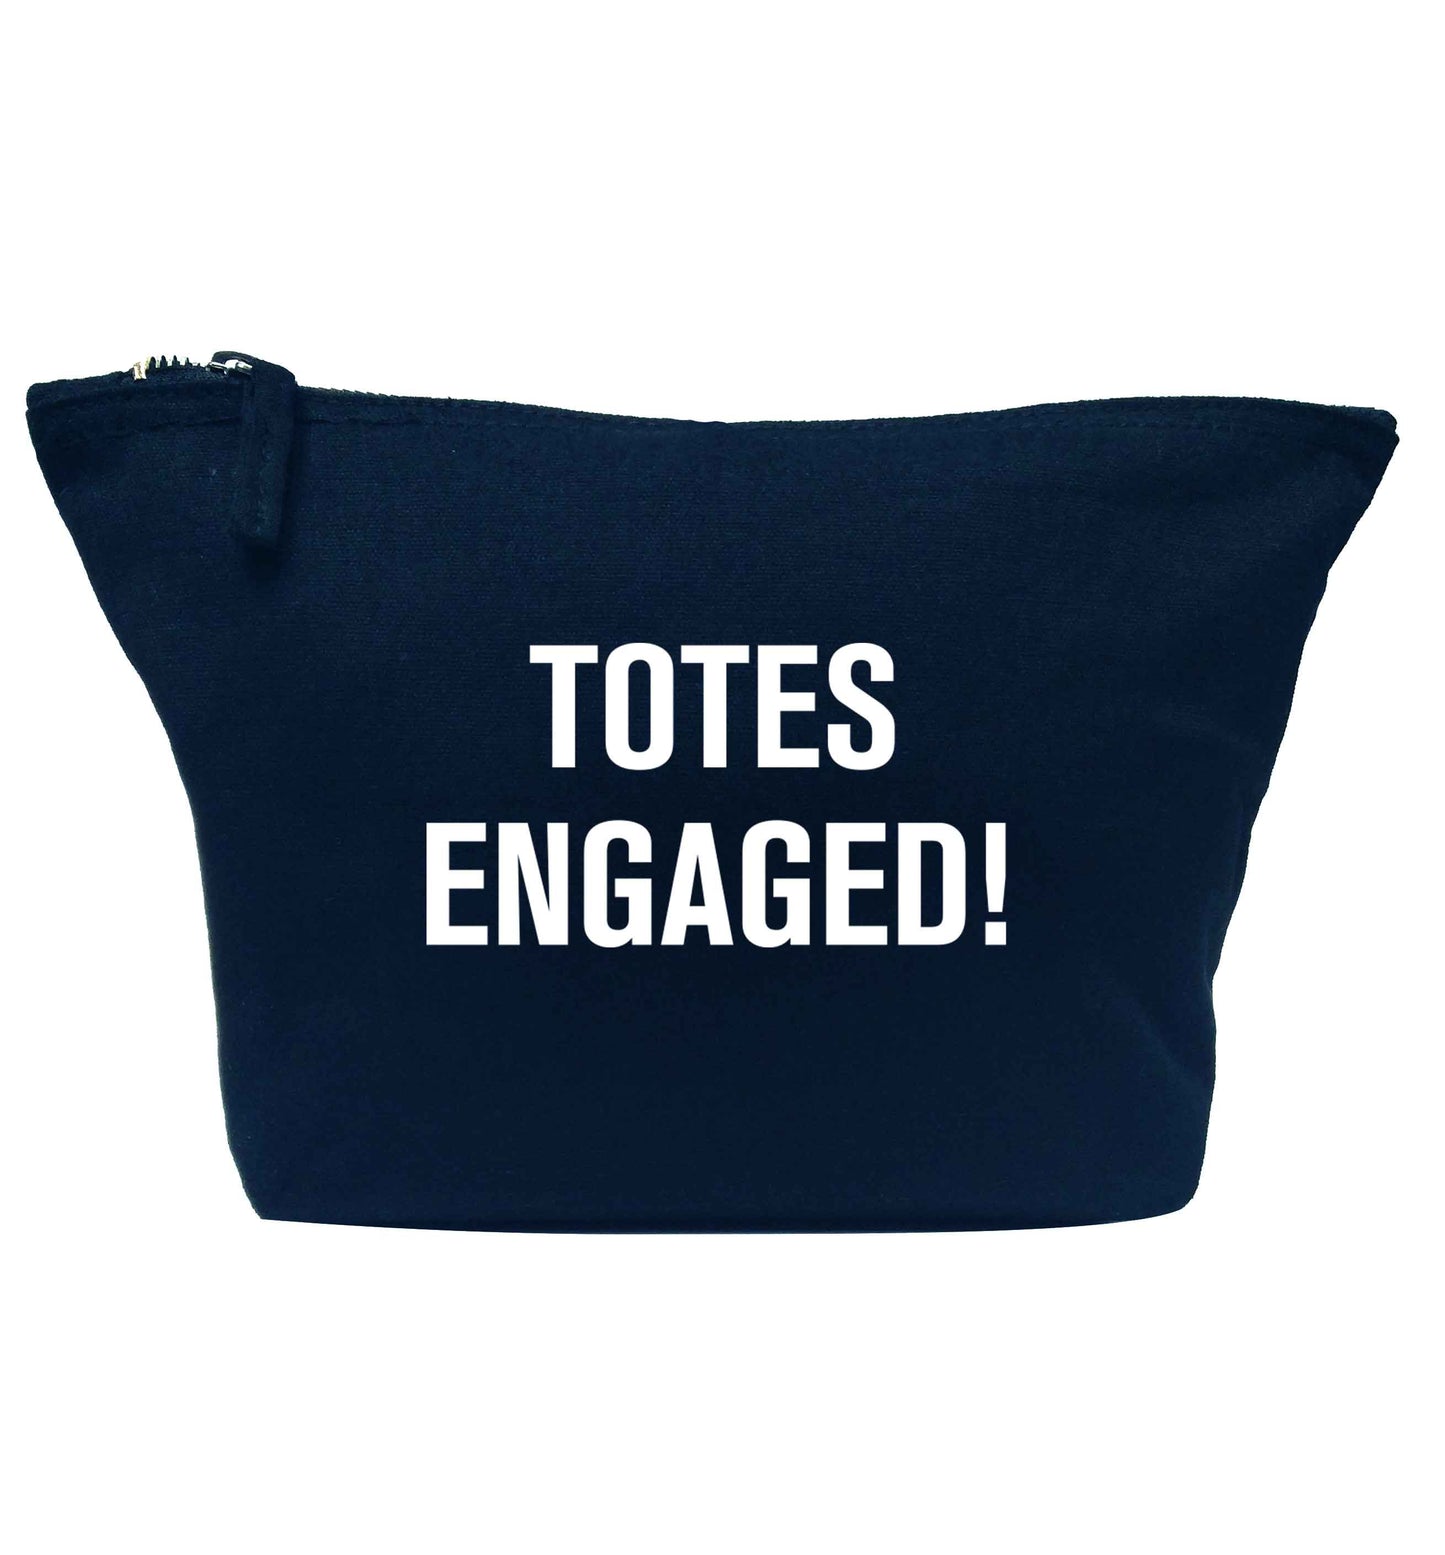 Totes engaged navy makeup bag